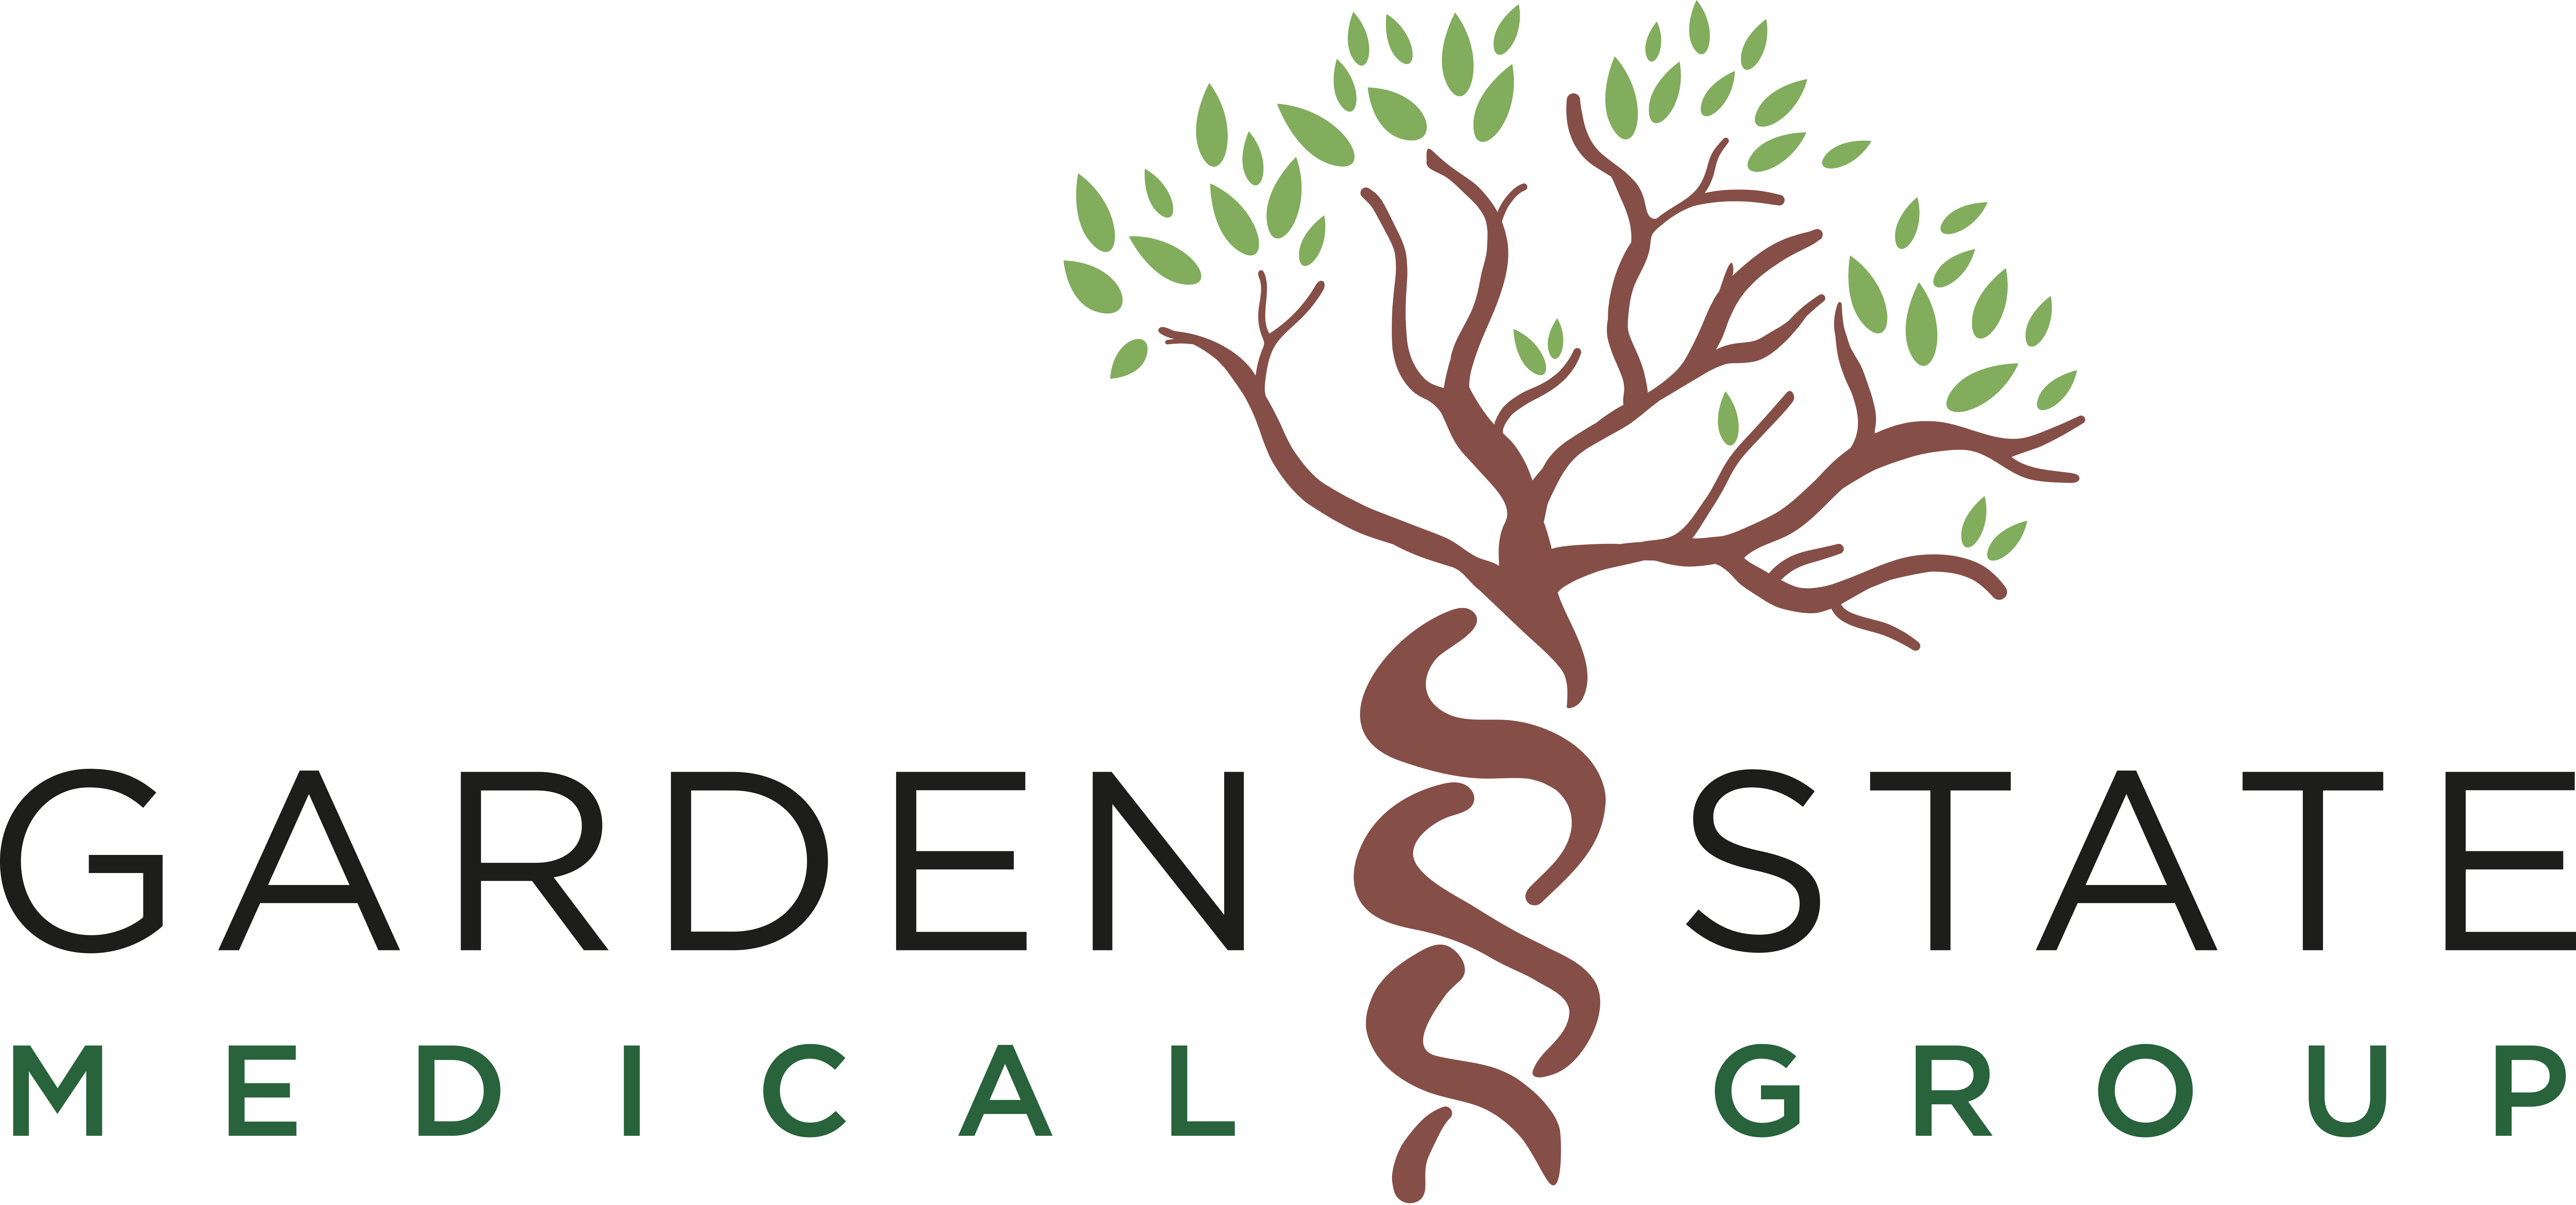 Garden State Medical Group Logo